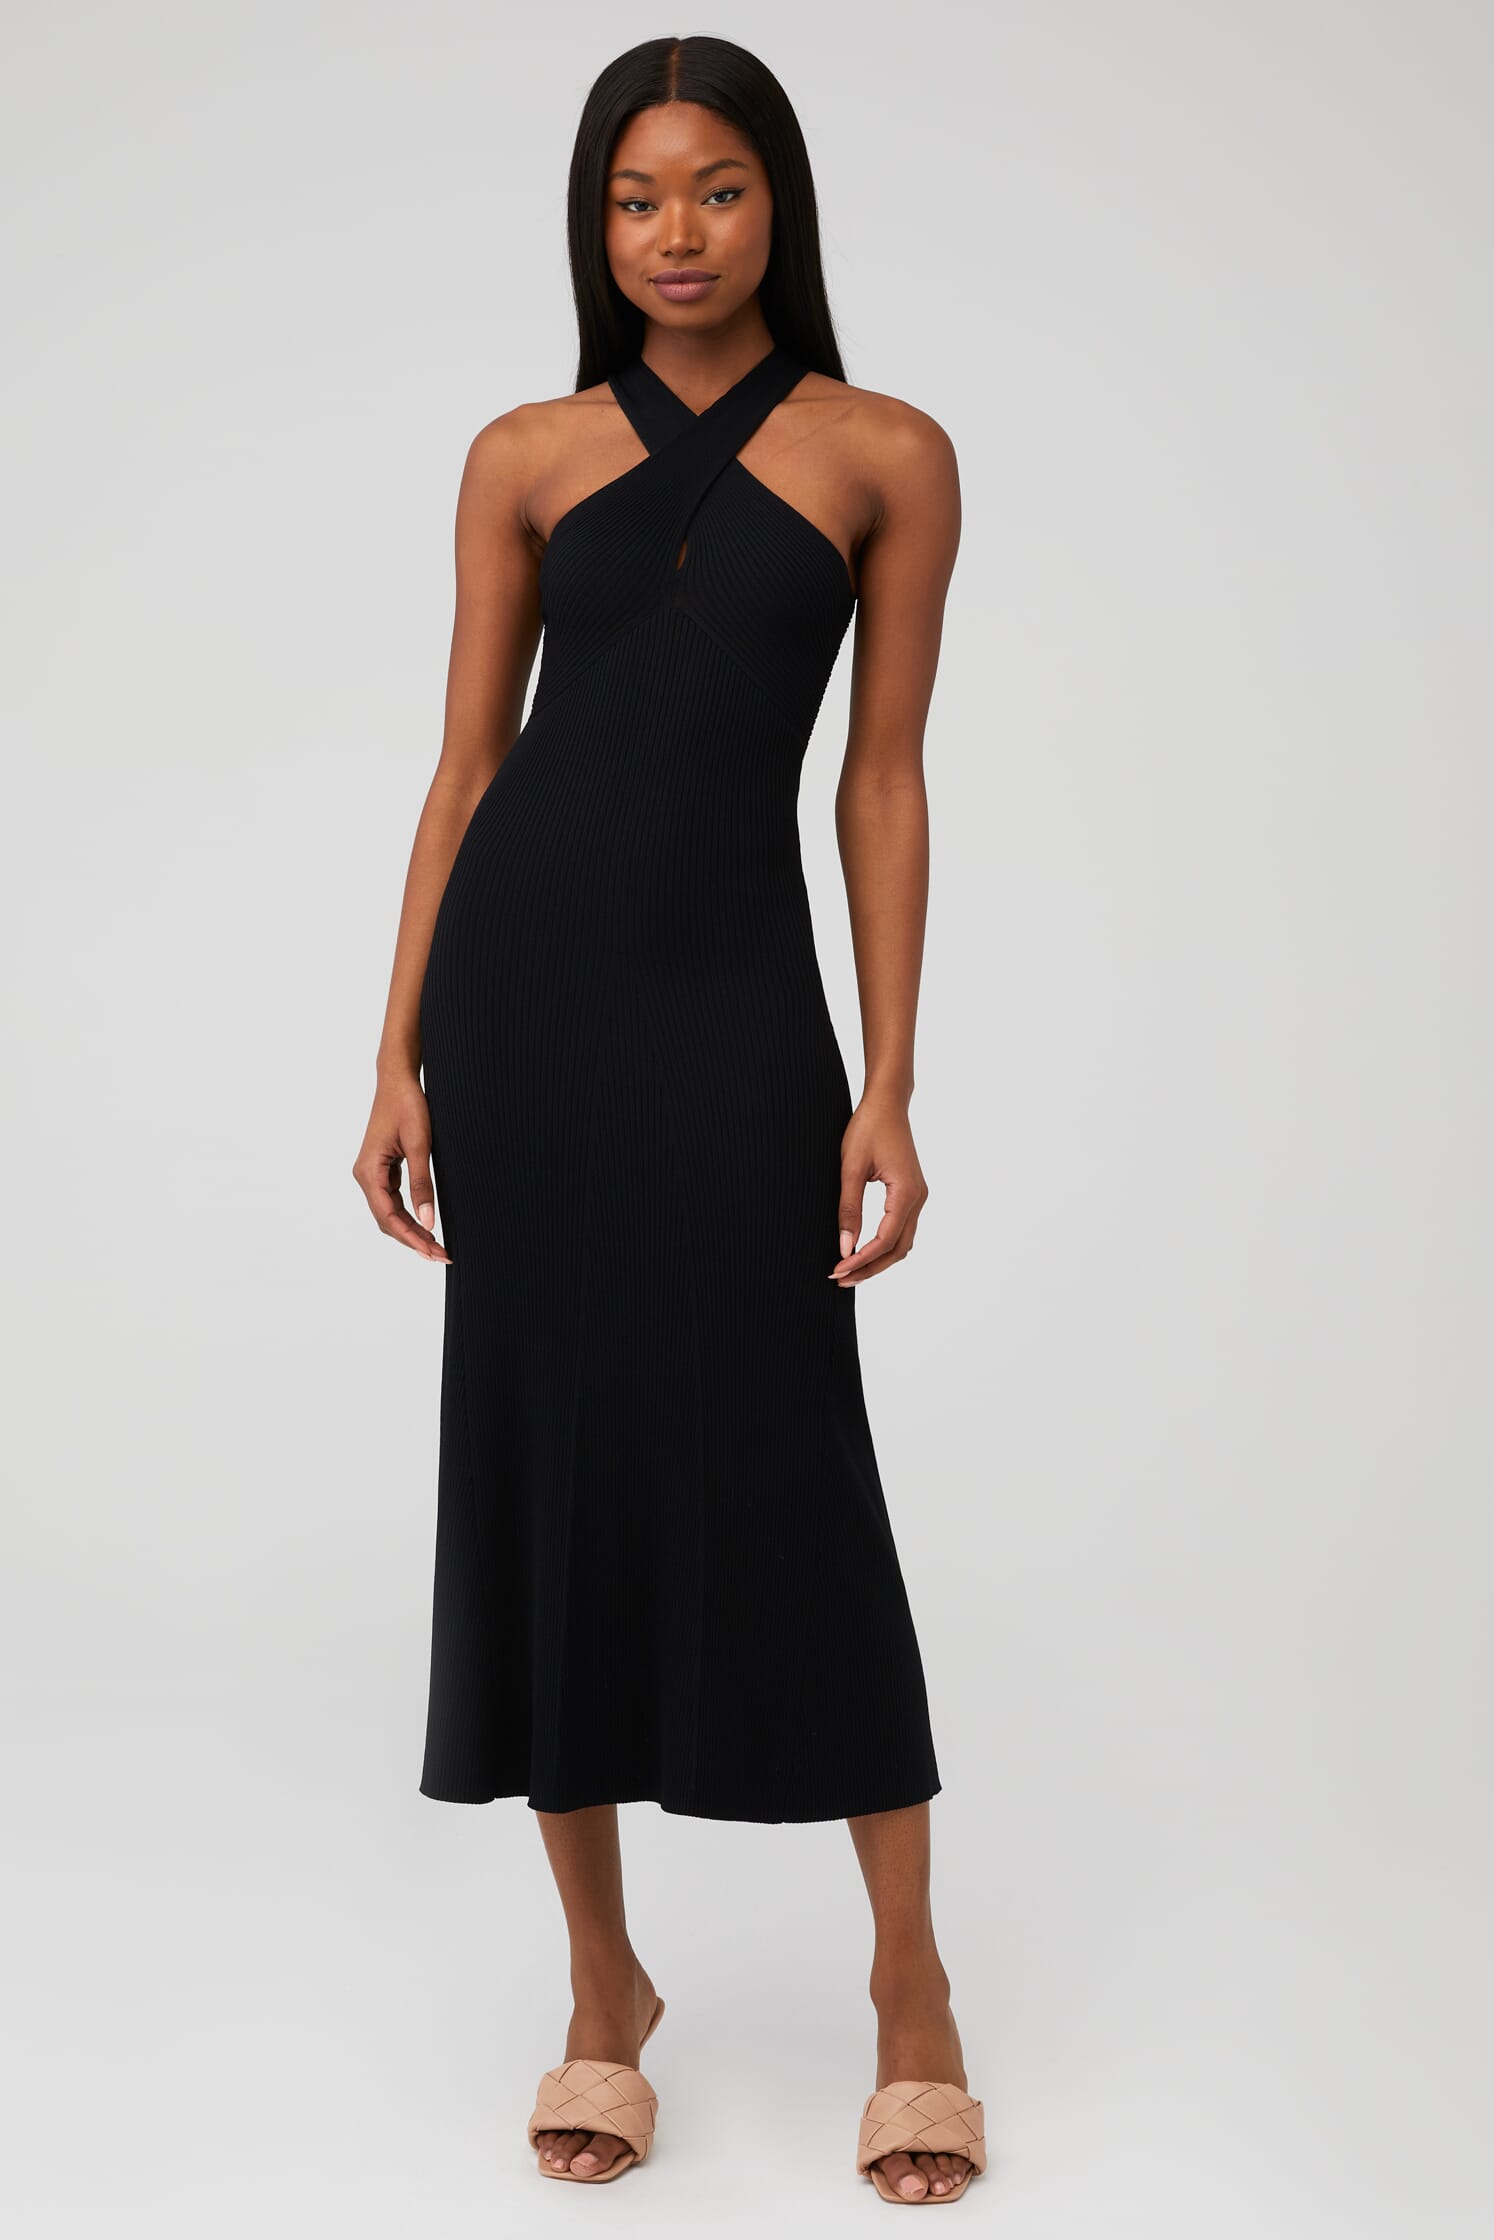 https://images.fashionpass.com/products/dre-criss-cross-midi-dress-line-and-dot-black-cbd-1.jpeg?profile=a